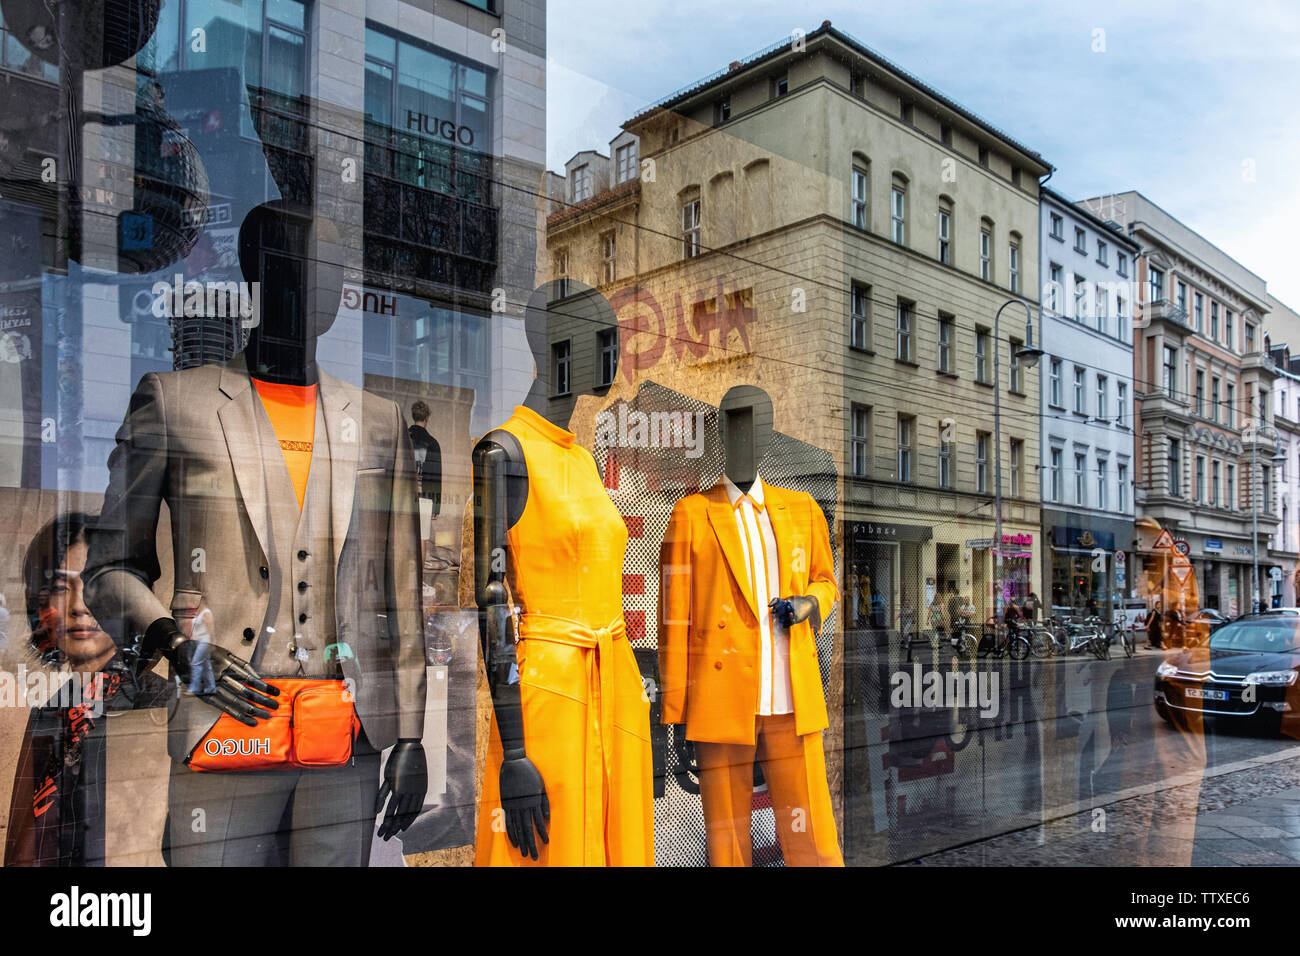 Hugo Boss Store window in Rosenthaler Strasse, Mitte-Berlin. Shop selling stylish clothing for men & women Stock Photo Alamy